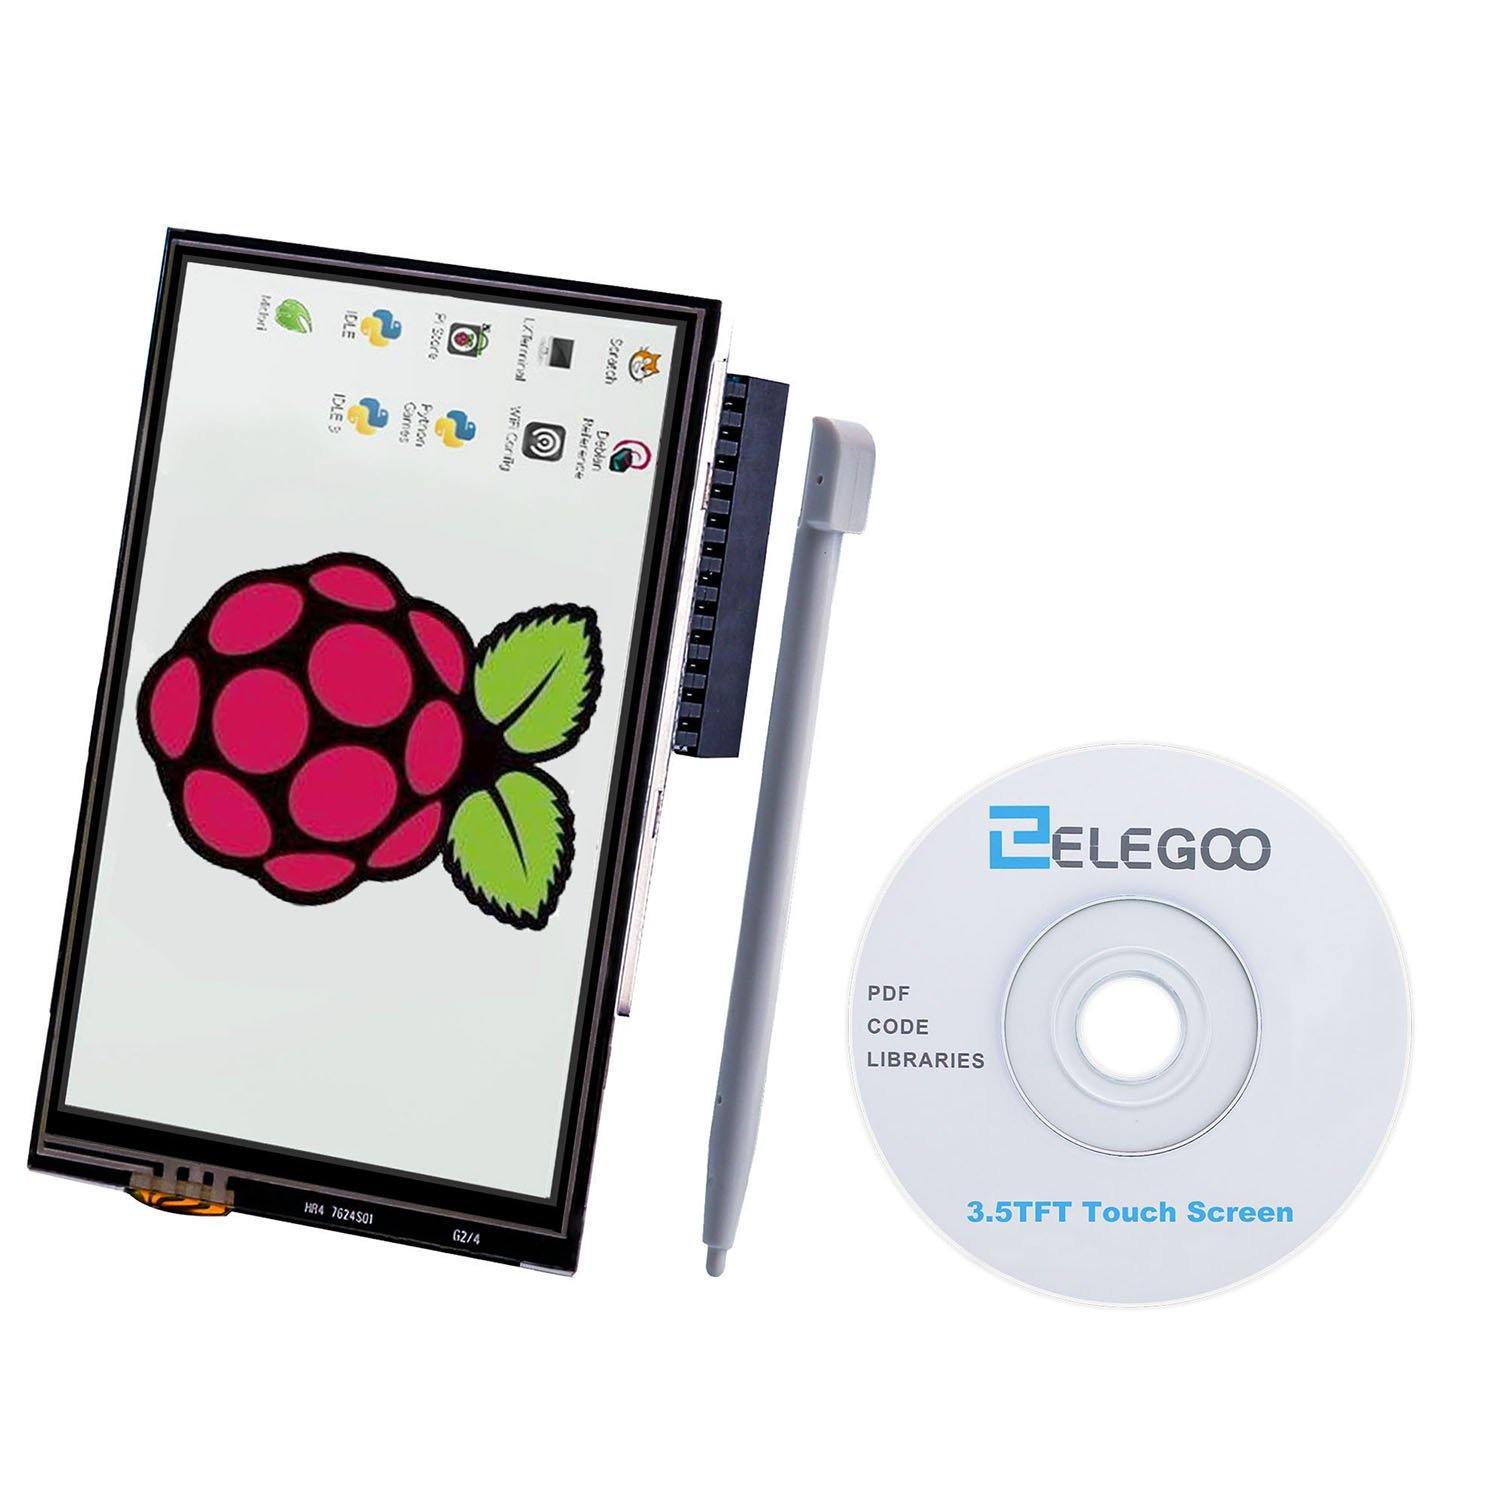 ELEGOO 3.5 inch Touch Screen for Raspberry Pi Tutorial